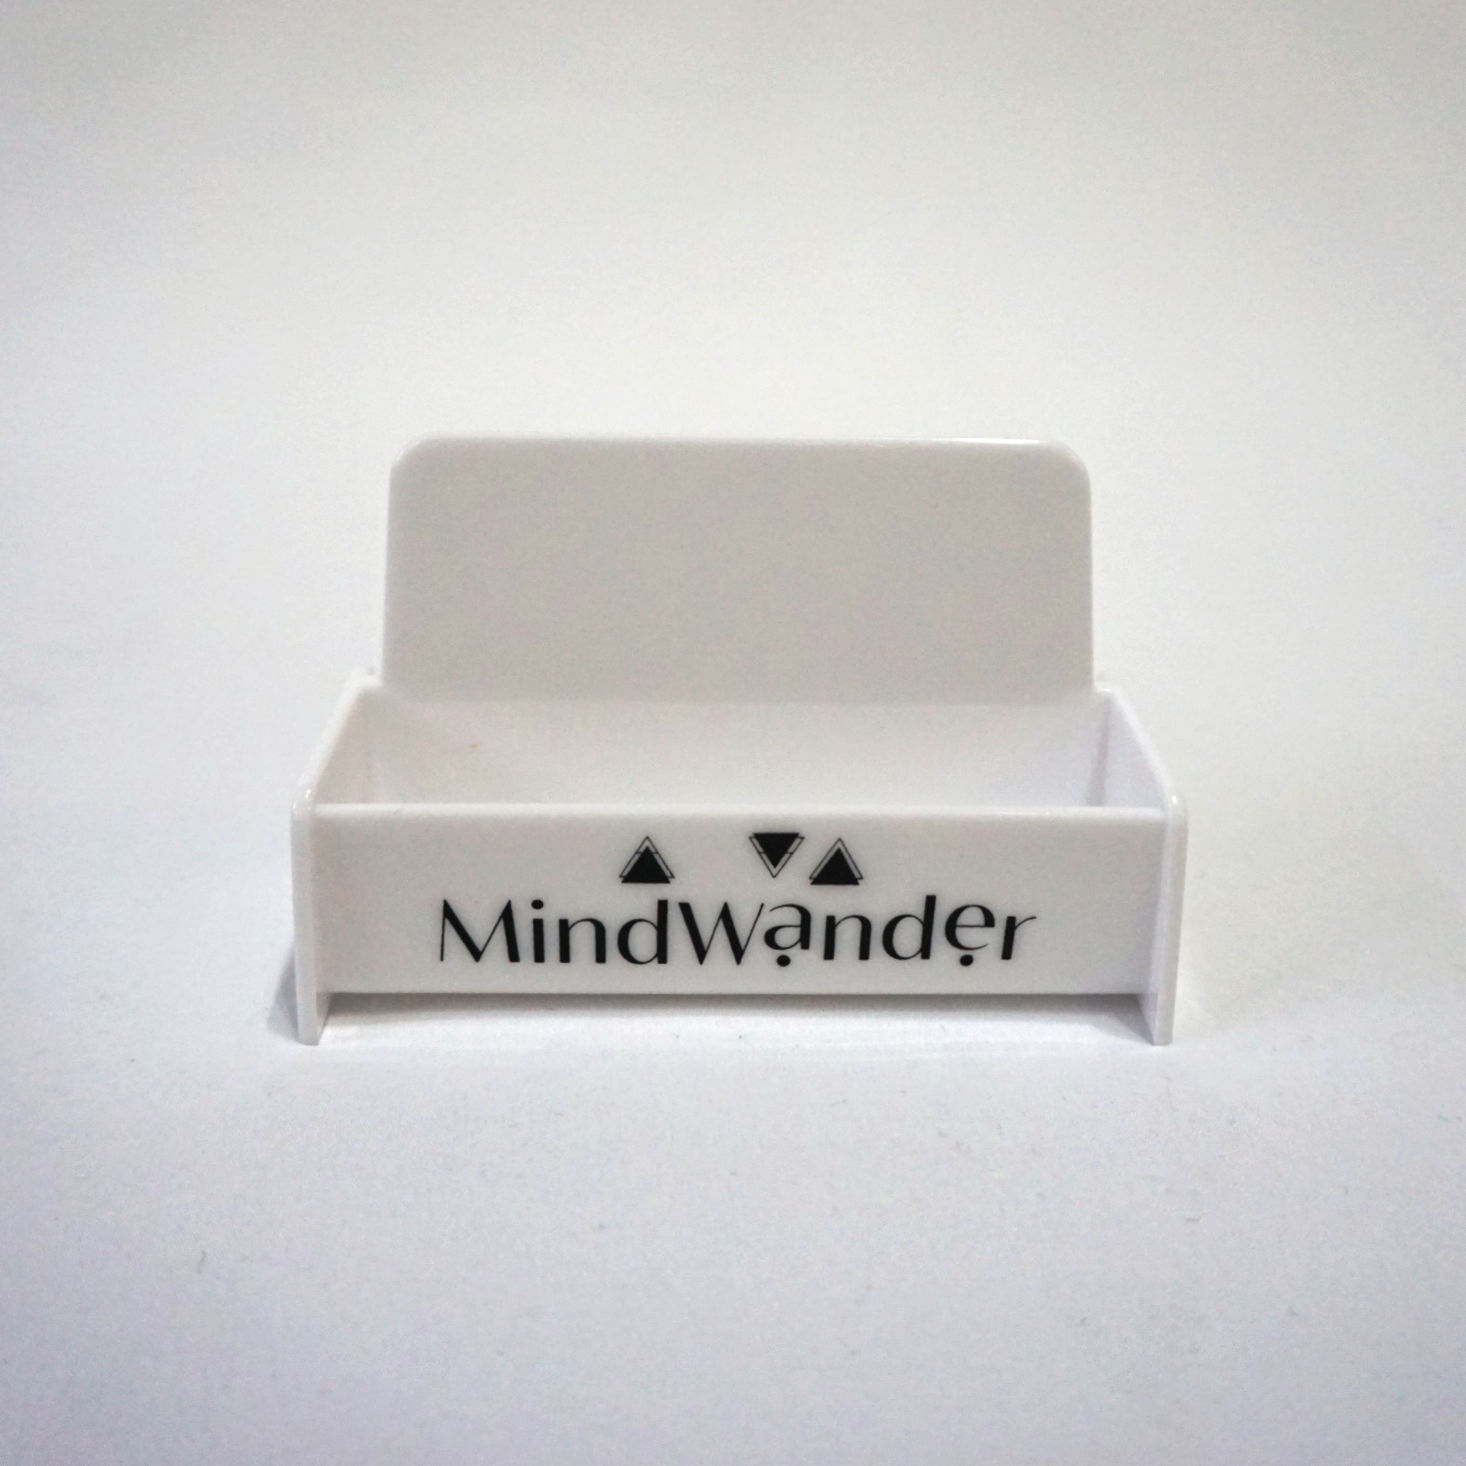 MindWander February 2020 card holder